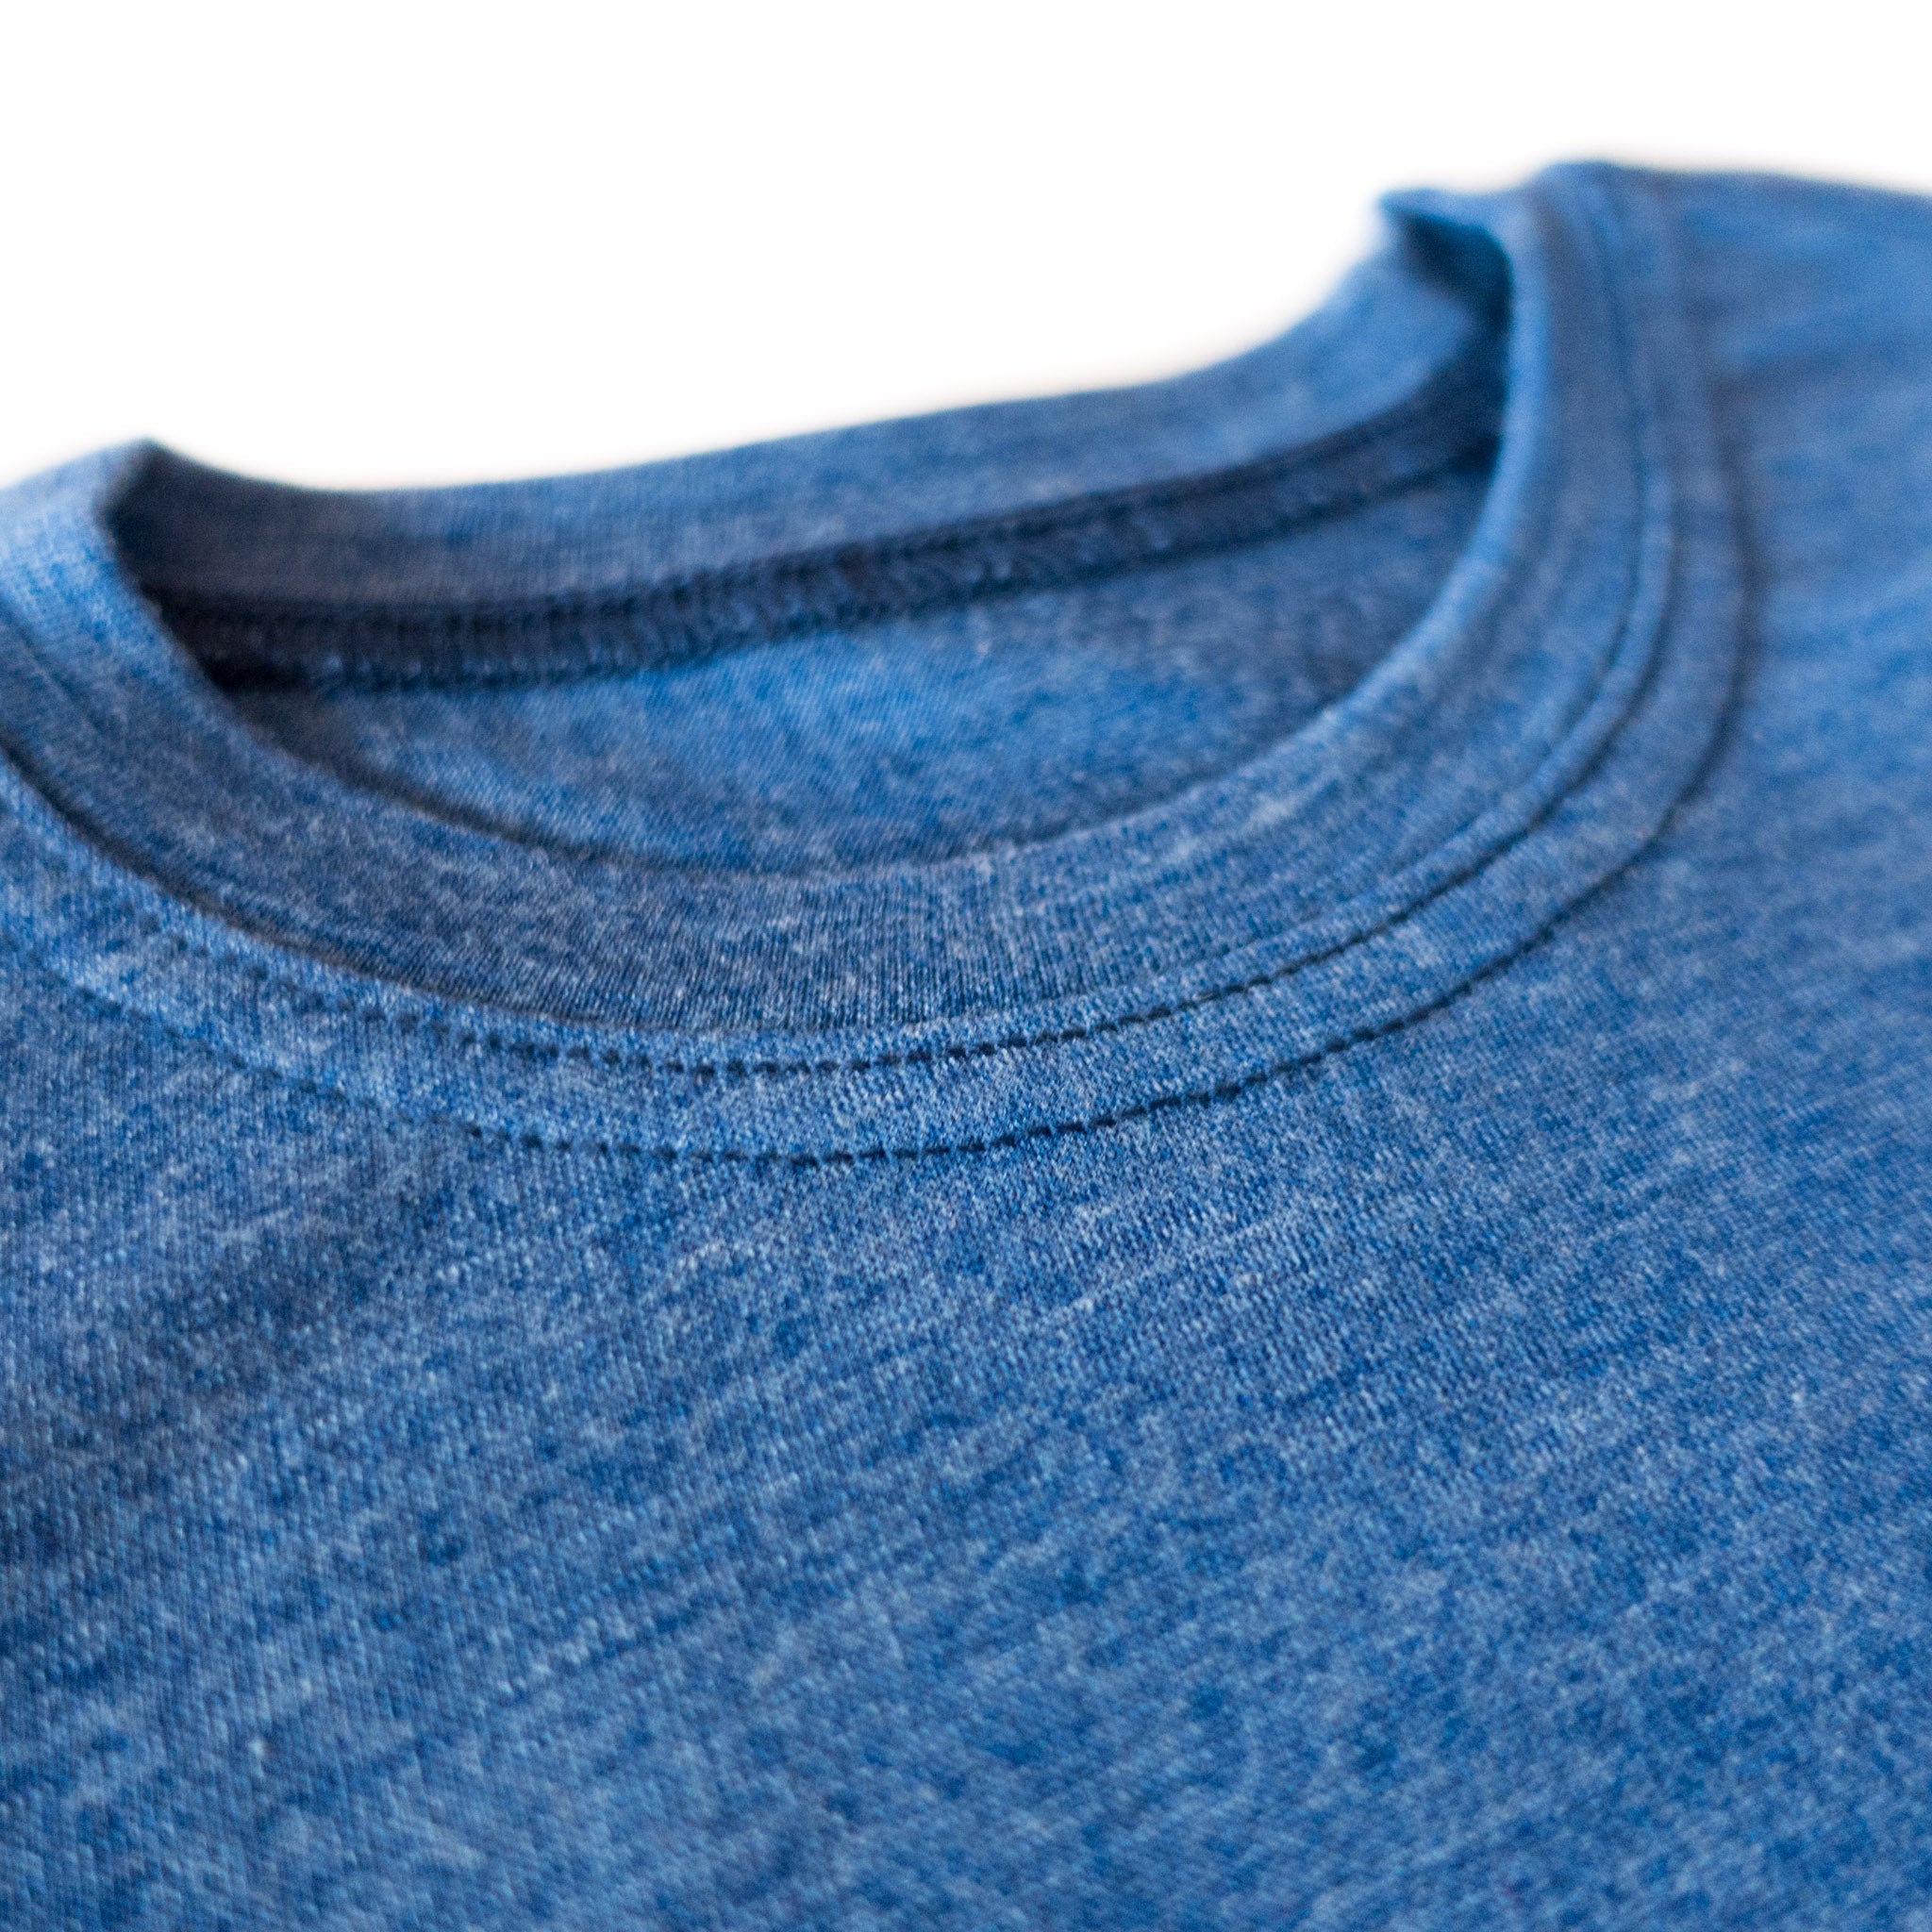 T-Shirt royal blau mit Hirschkäfer, Merinowolle & Seide (bio/GOTS) - Glückskind - T-Shirt - 86-92